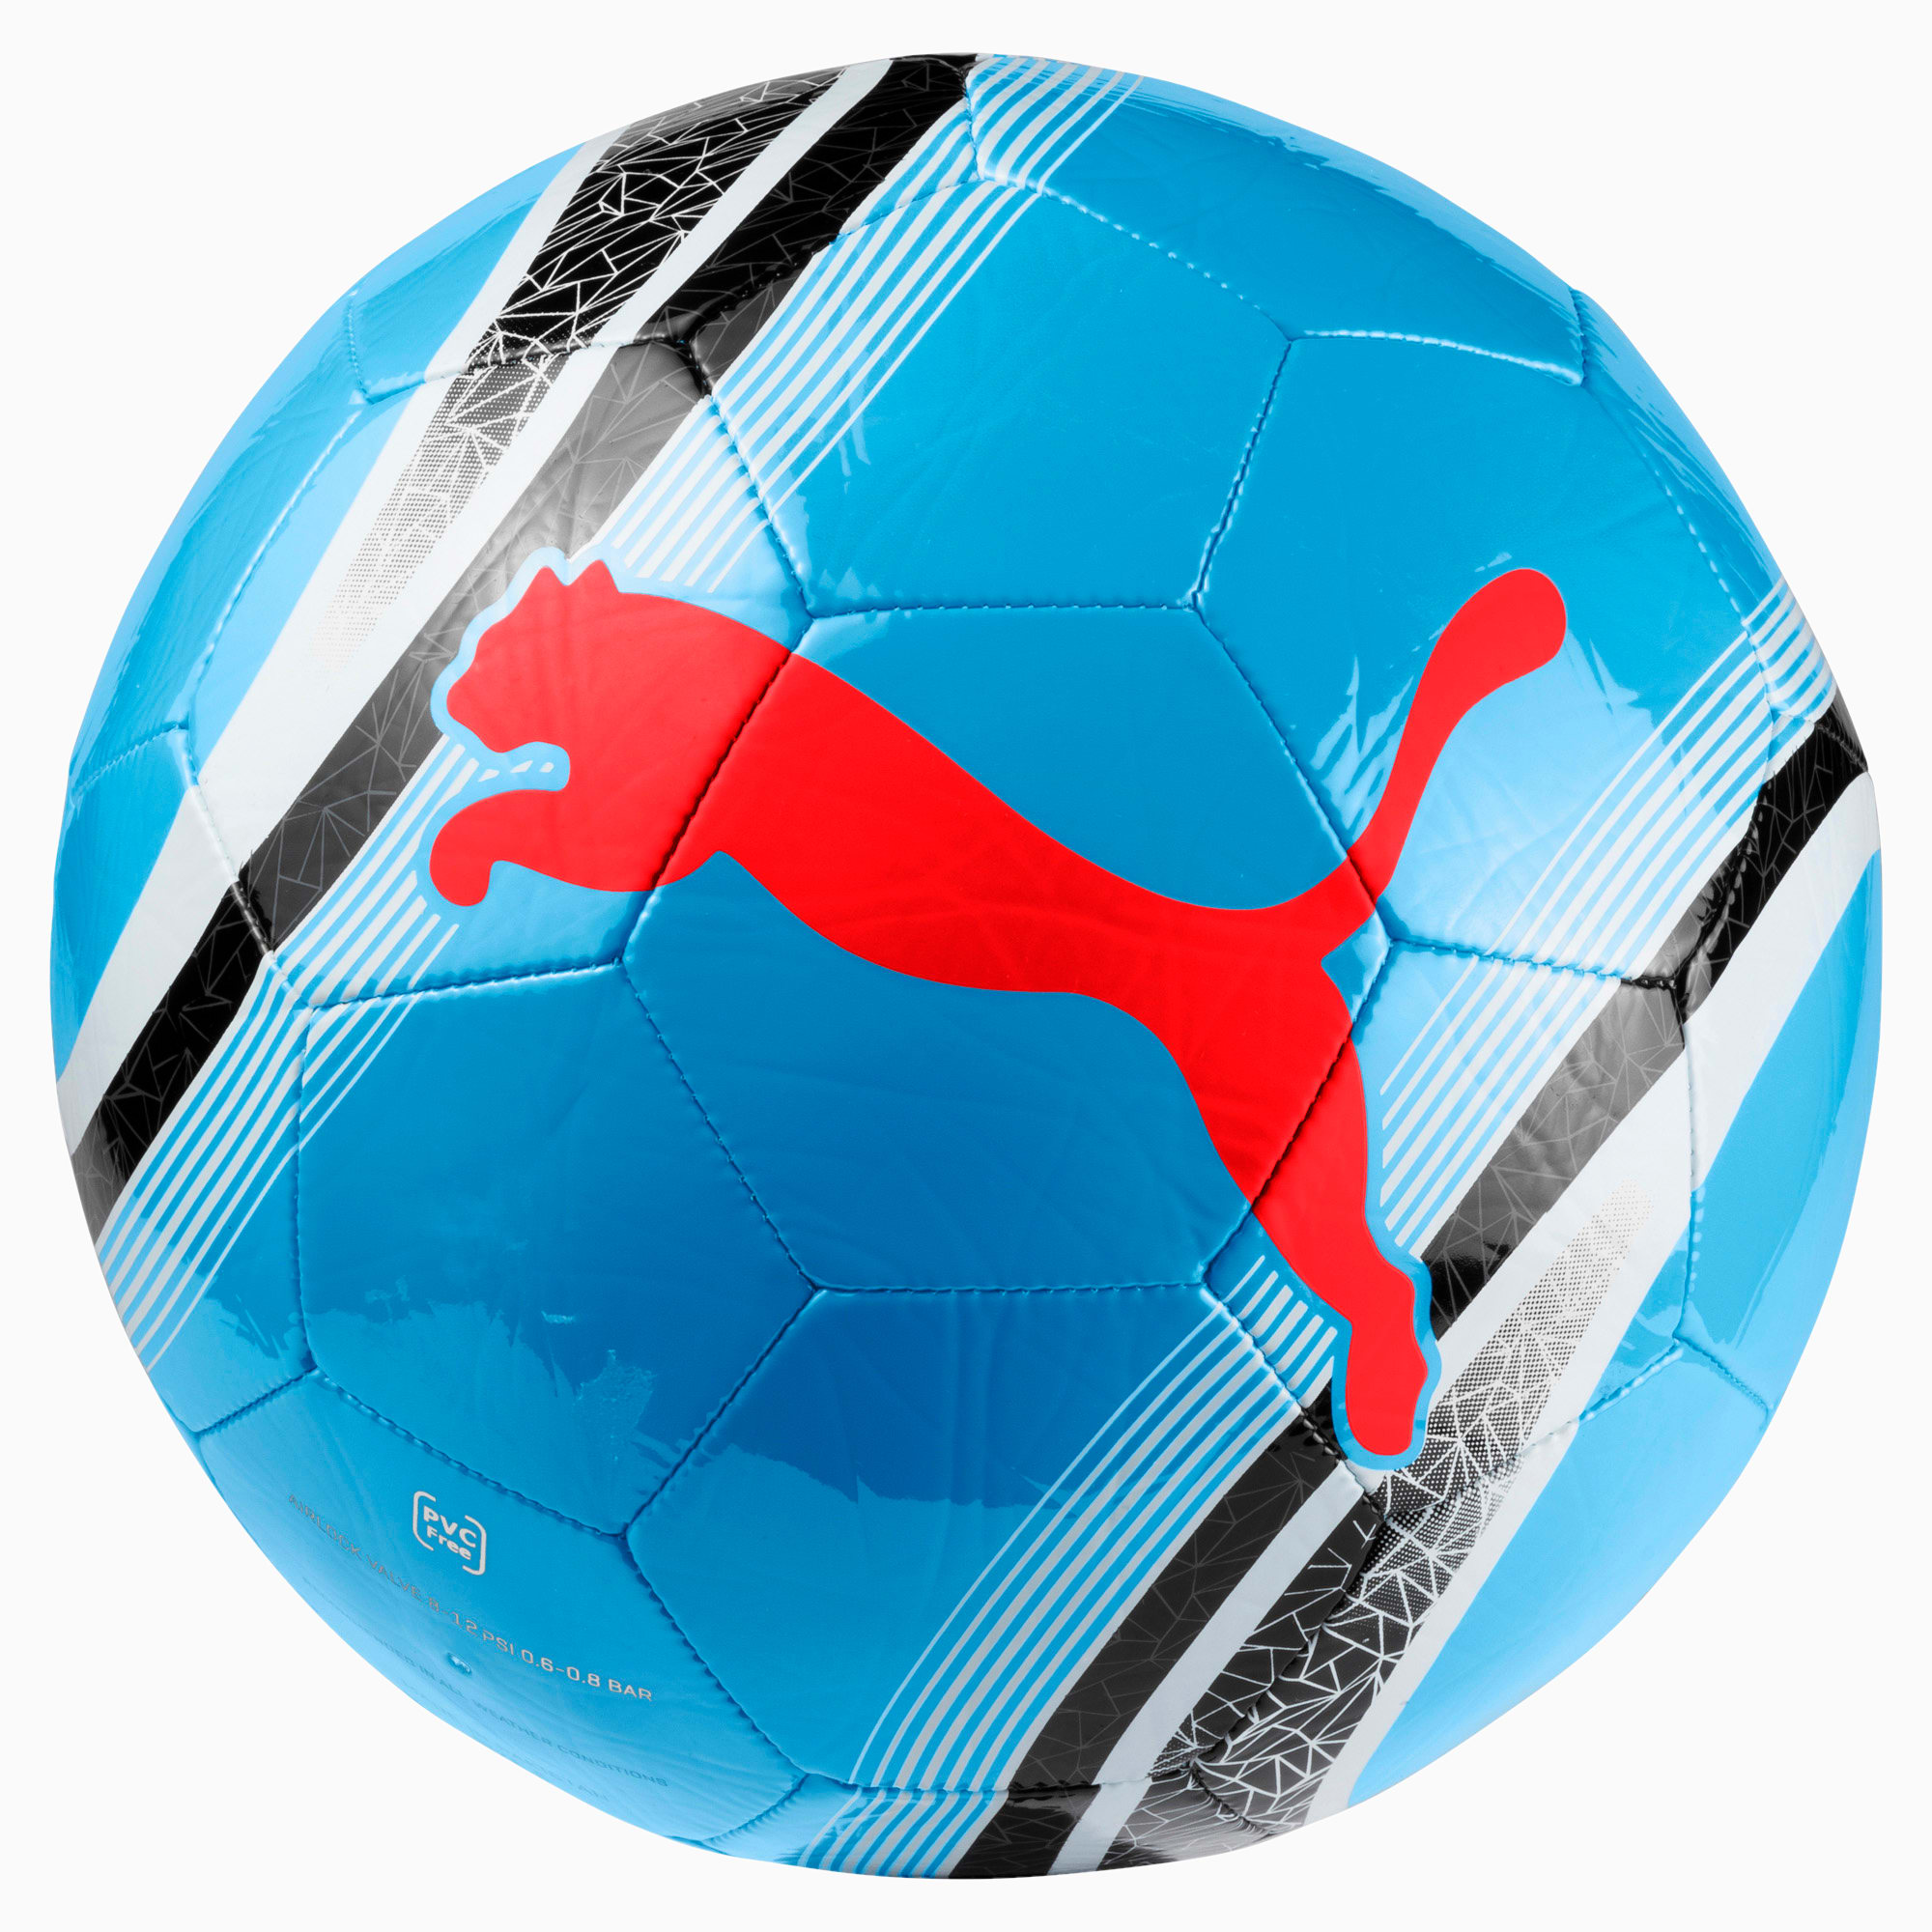 Balón de Fútbol Puma Big Cat Unisex